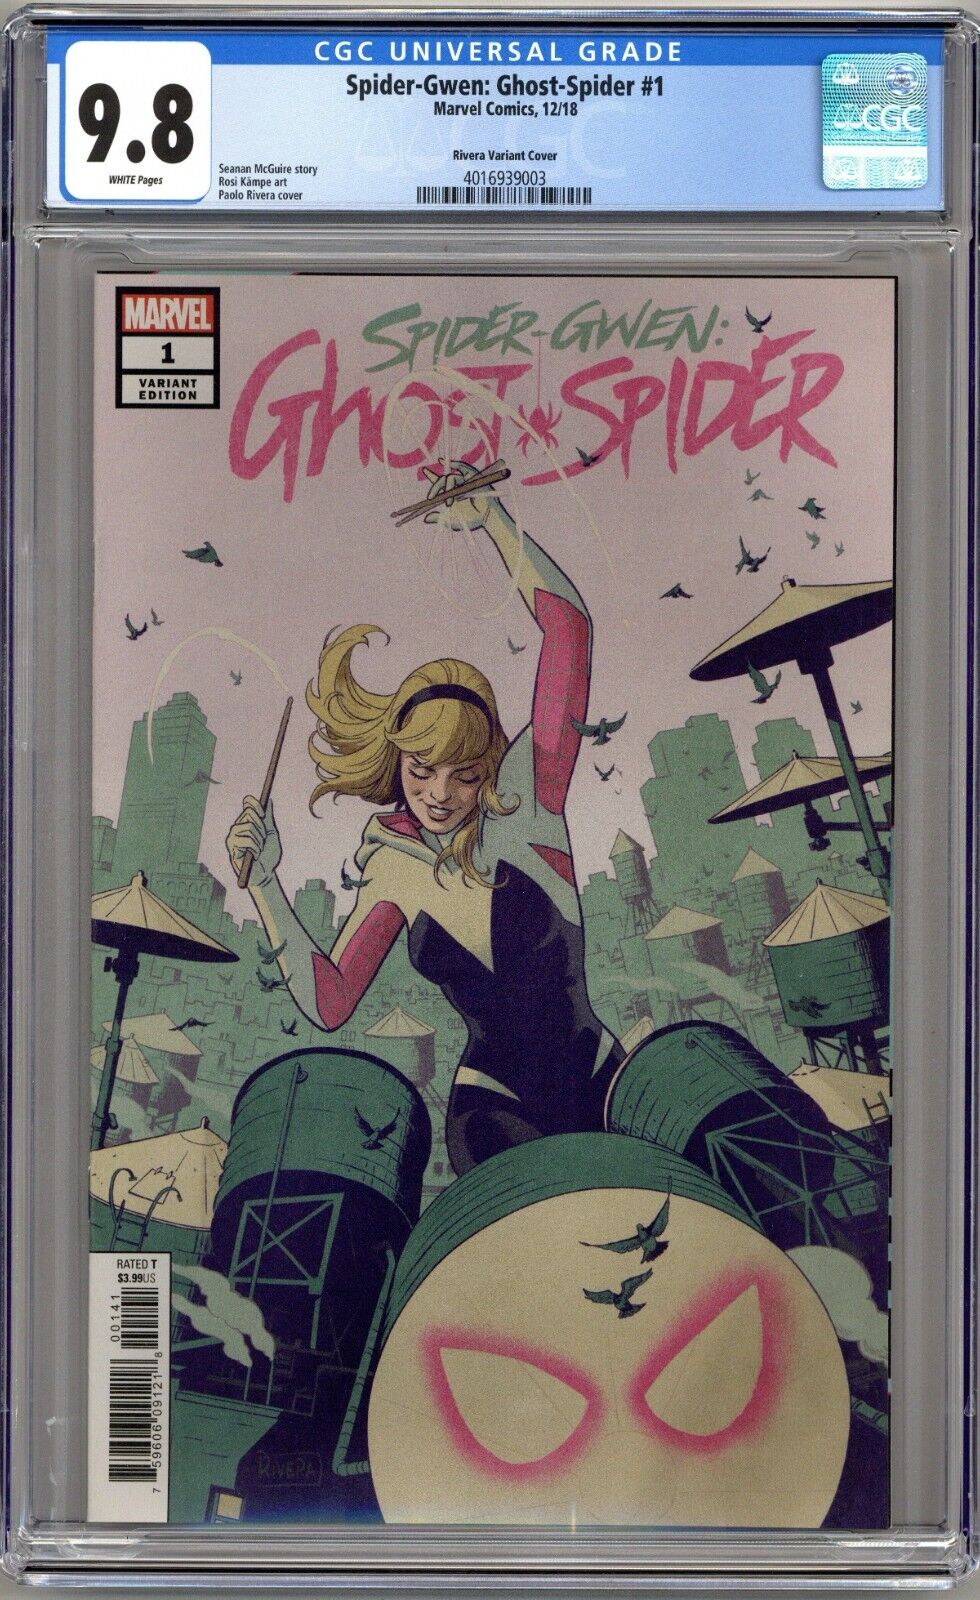 Spider-Gwen: Ghost-Spider #1 (2018) CGC 9.8 NM/M - 1:50 Rivera Variant Cover